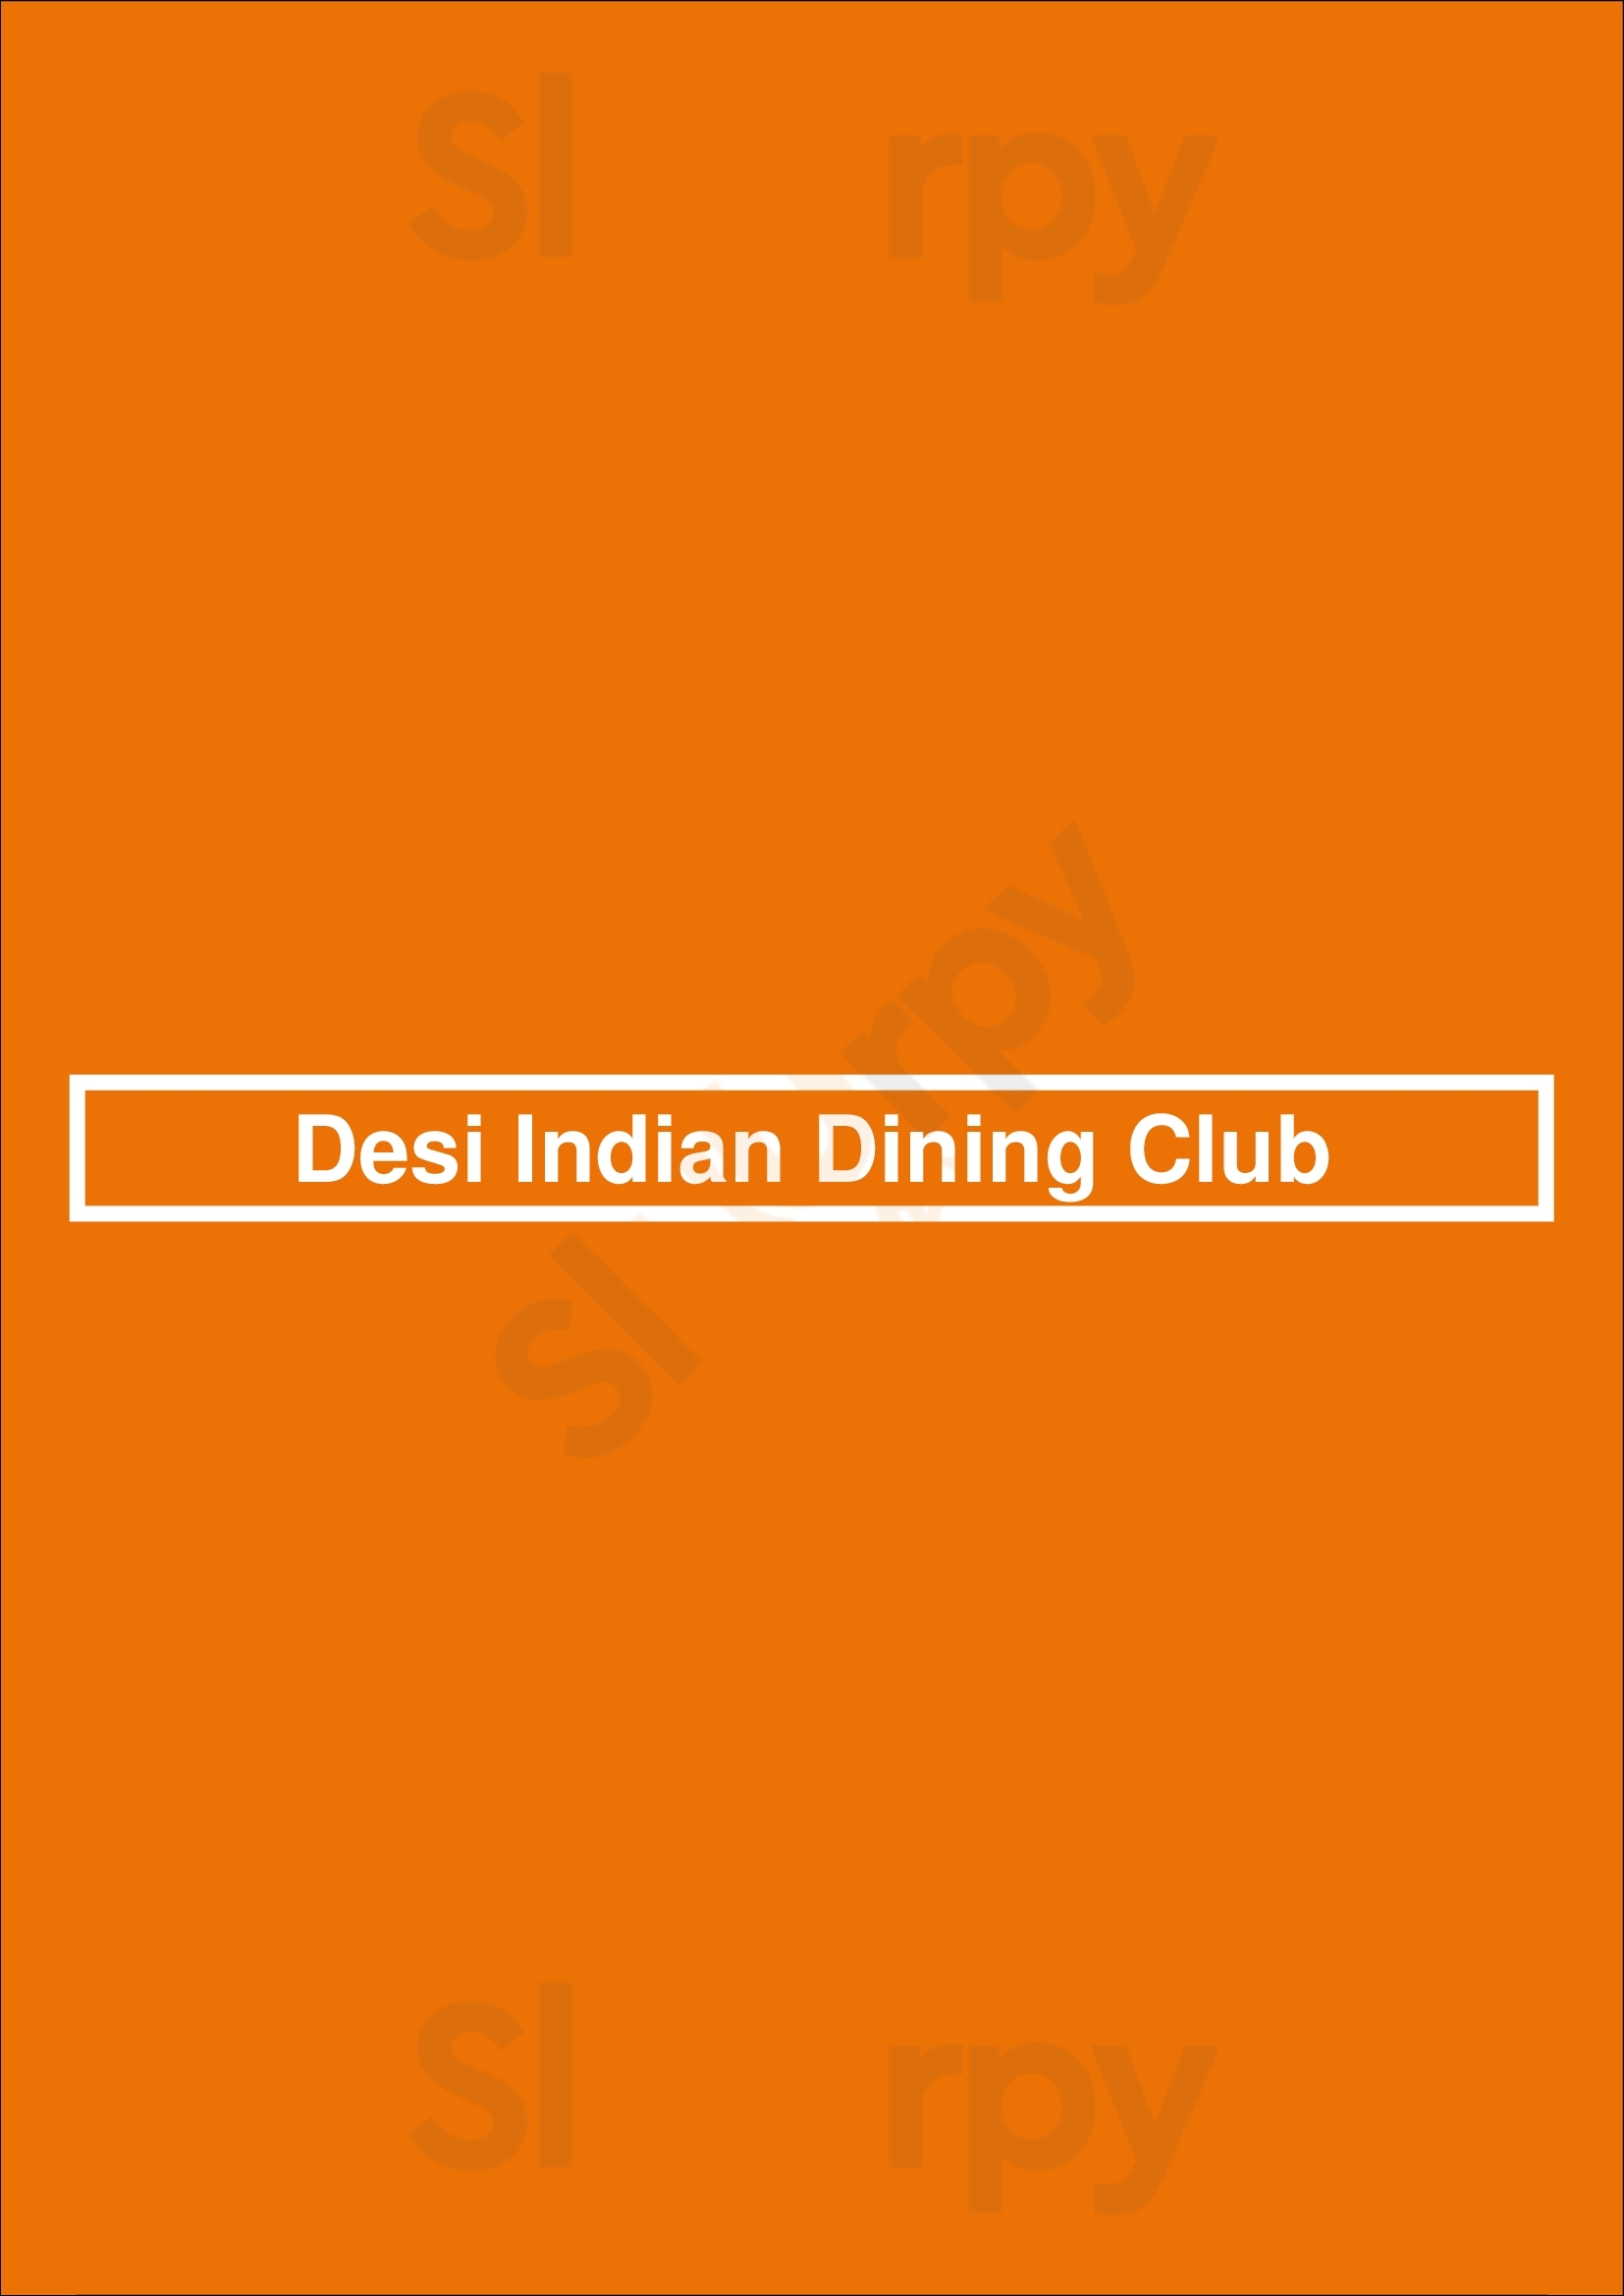 Desi Indian Dining Club Grays Thurrock Menu - 1